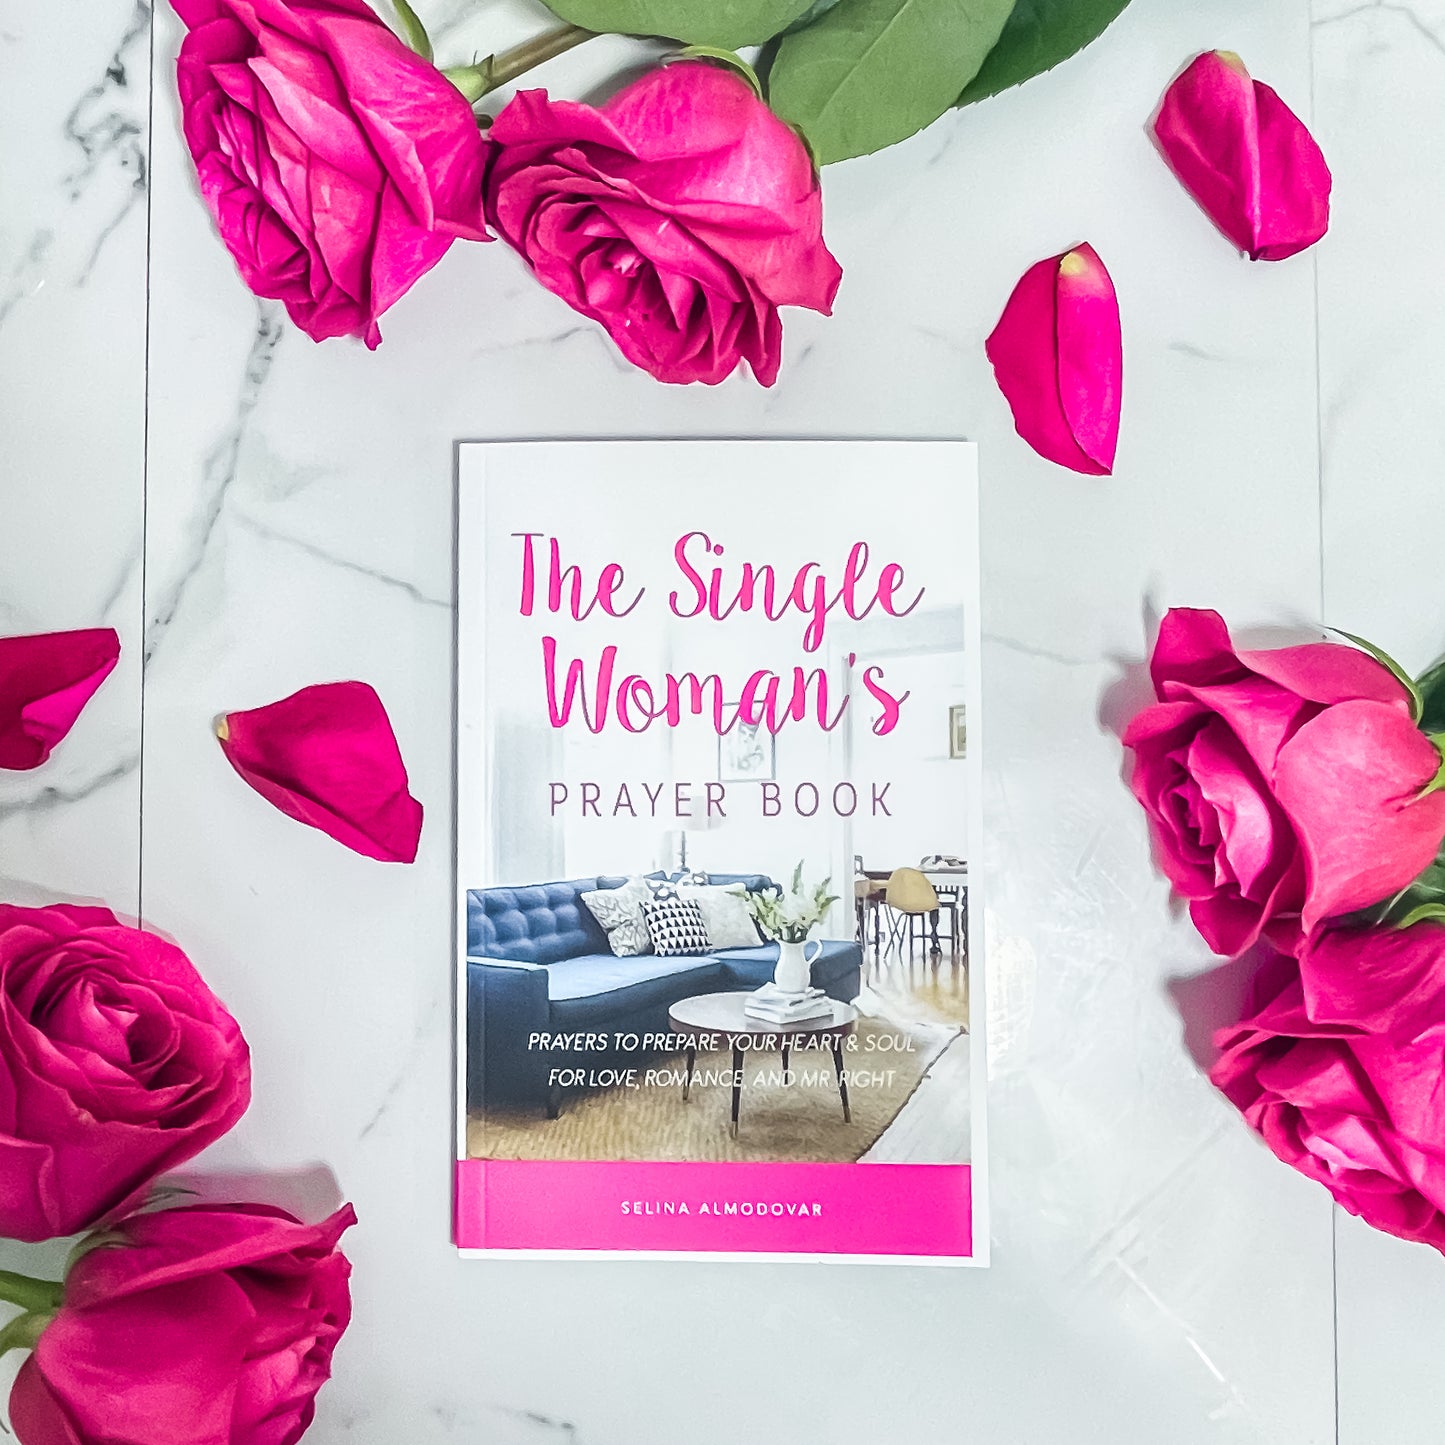 The Single Woman's Prayer Book